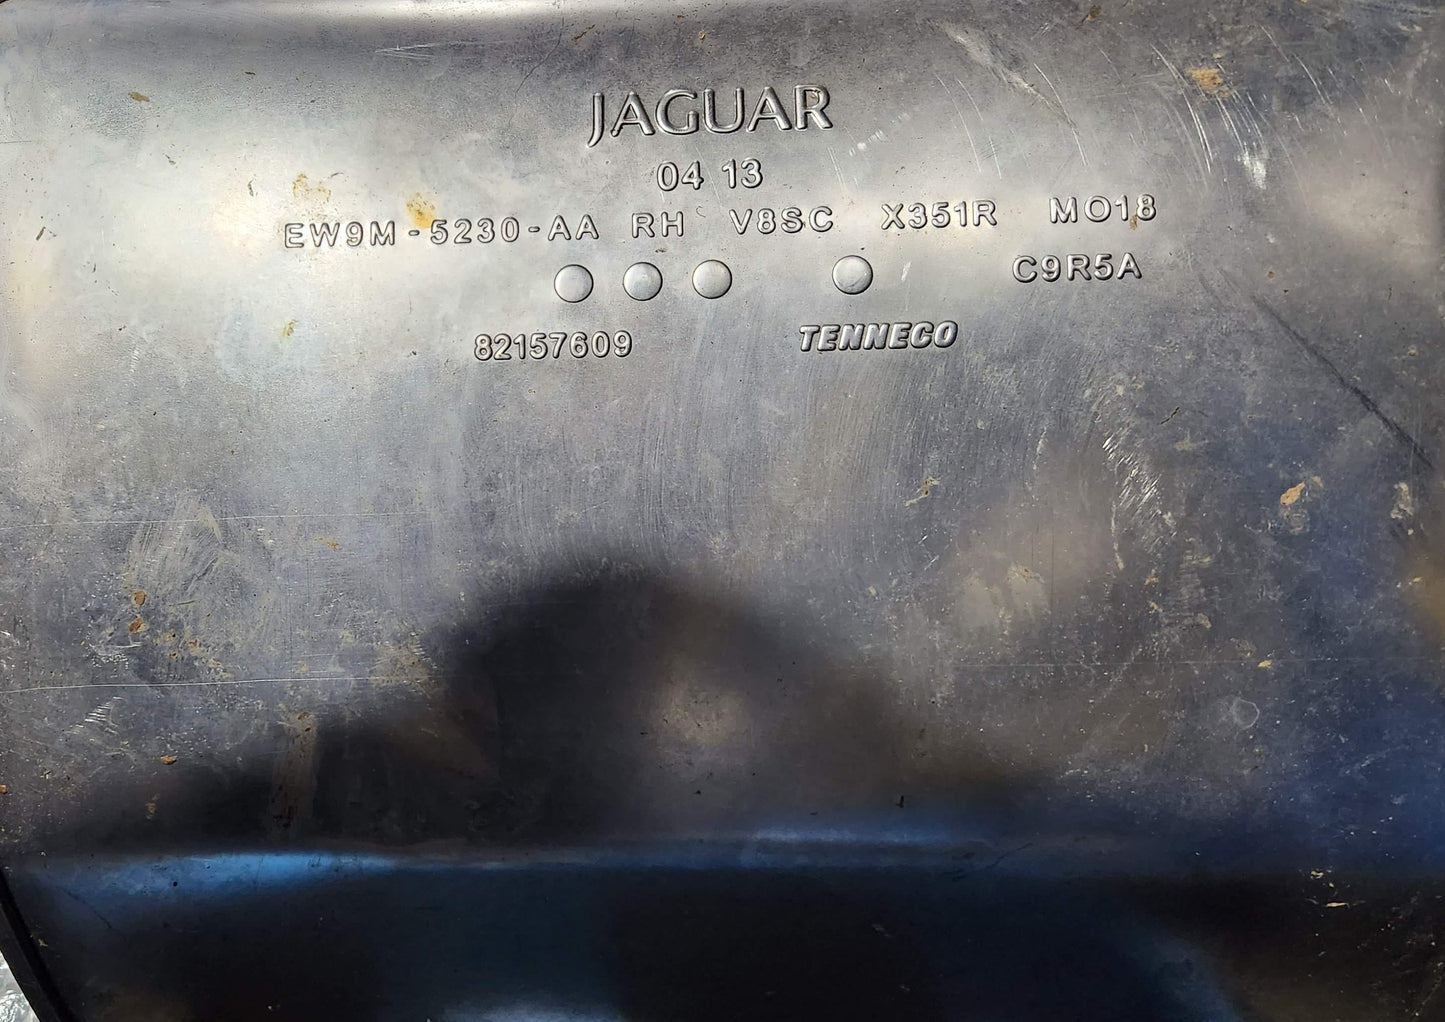 Jaguar XJ SCARICARE LA MANO DESTRA ATTIVO 3.0 / 5.0 C2D32168 EW9M5230AA